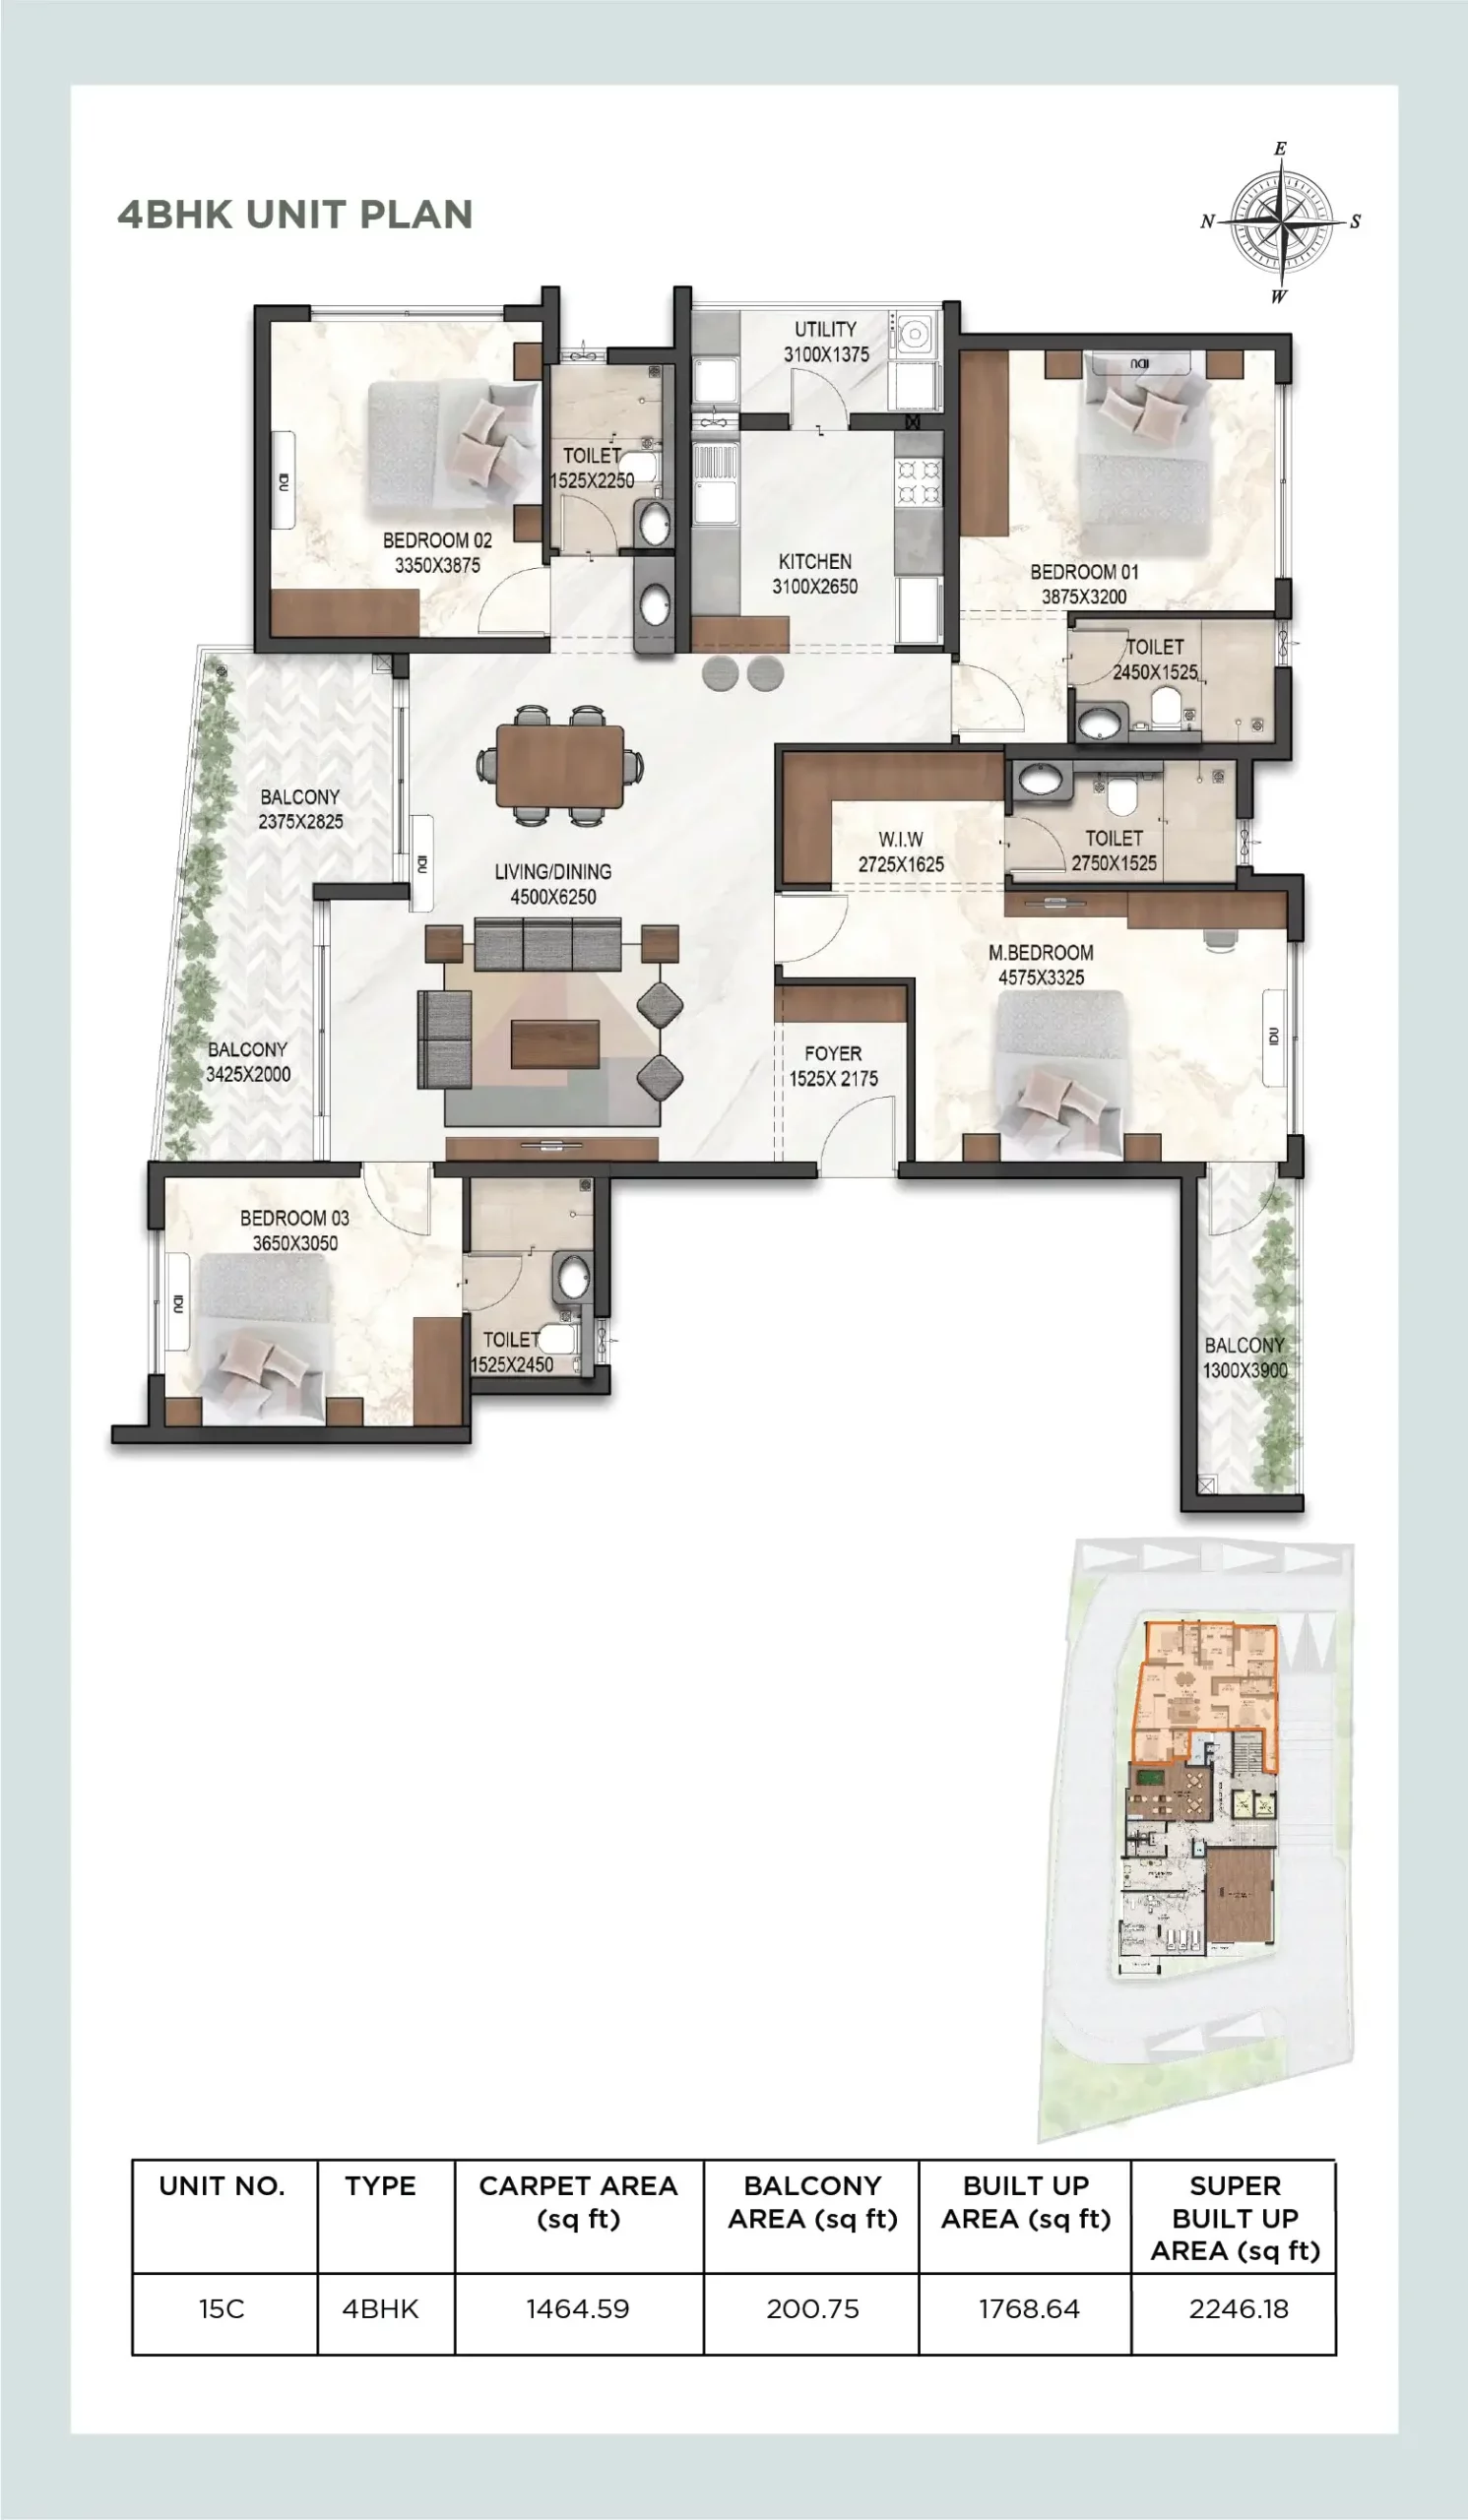 2246 sqft 4bhk apartment floor plan in where dreams begin pattom, trivandrum